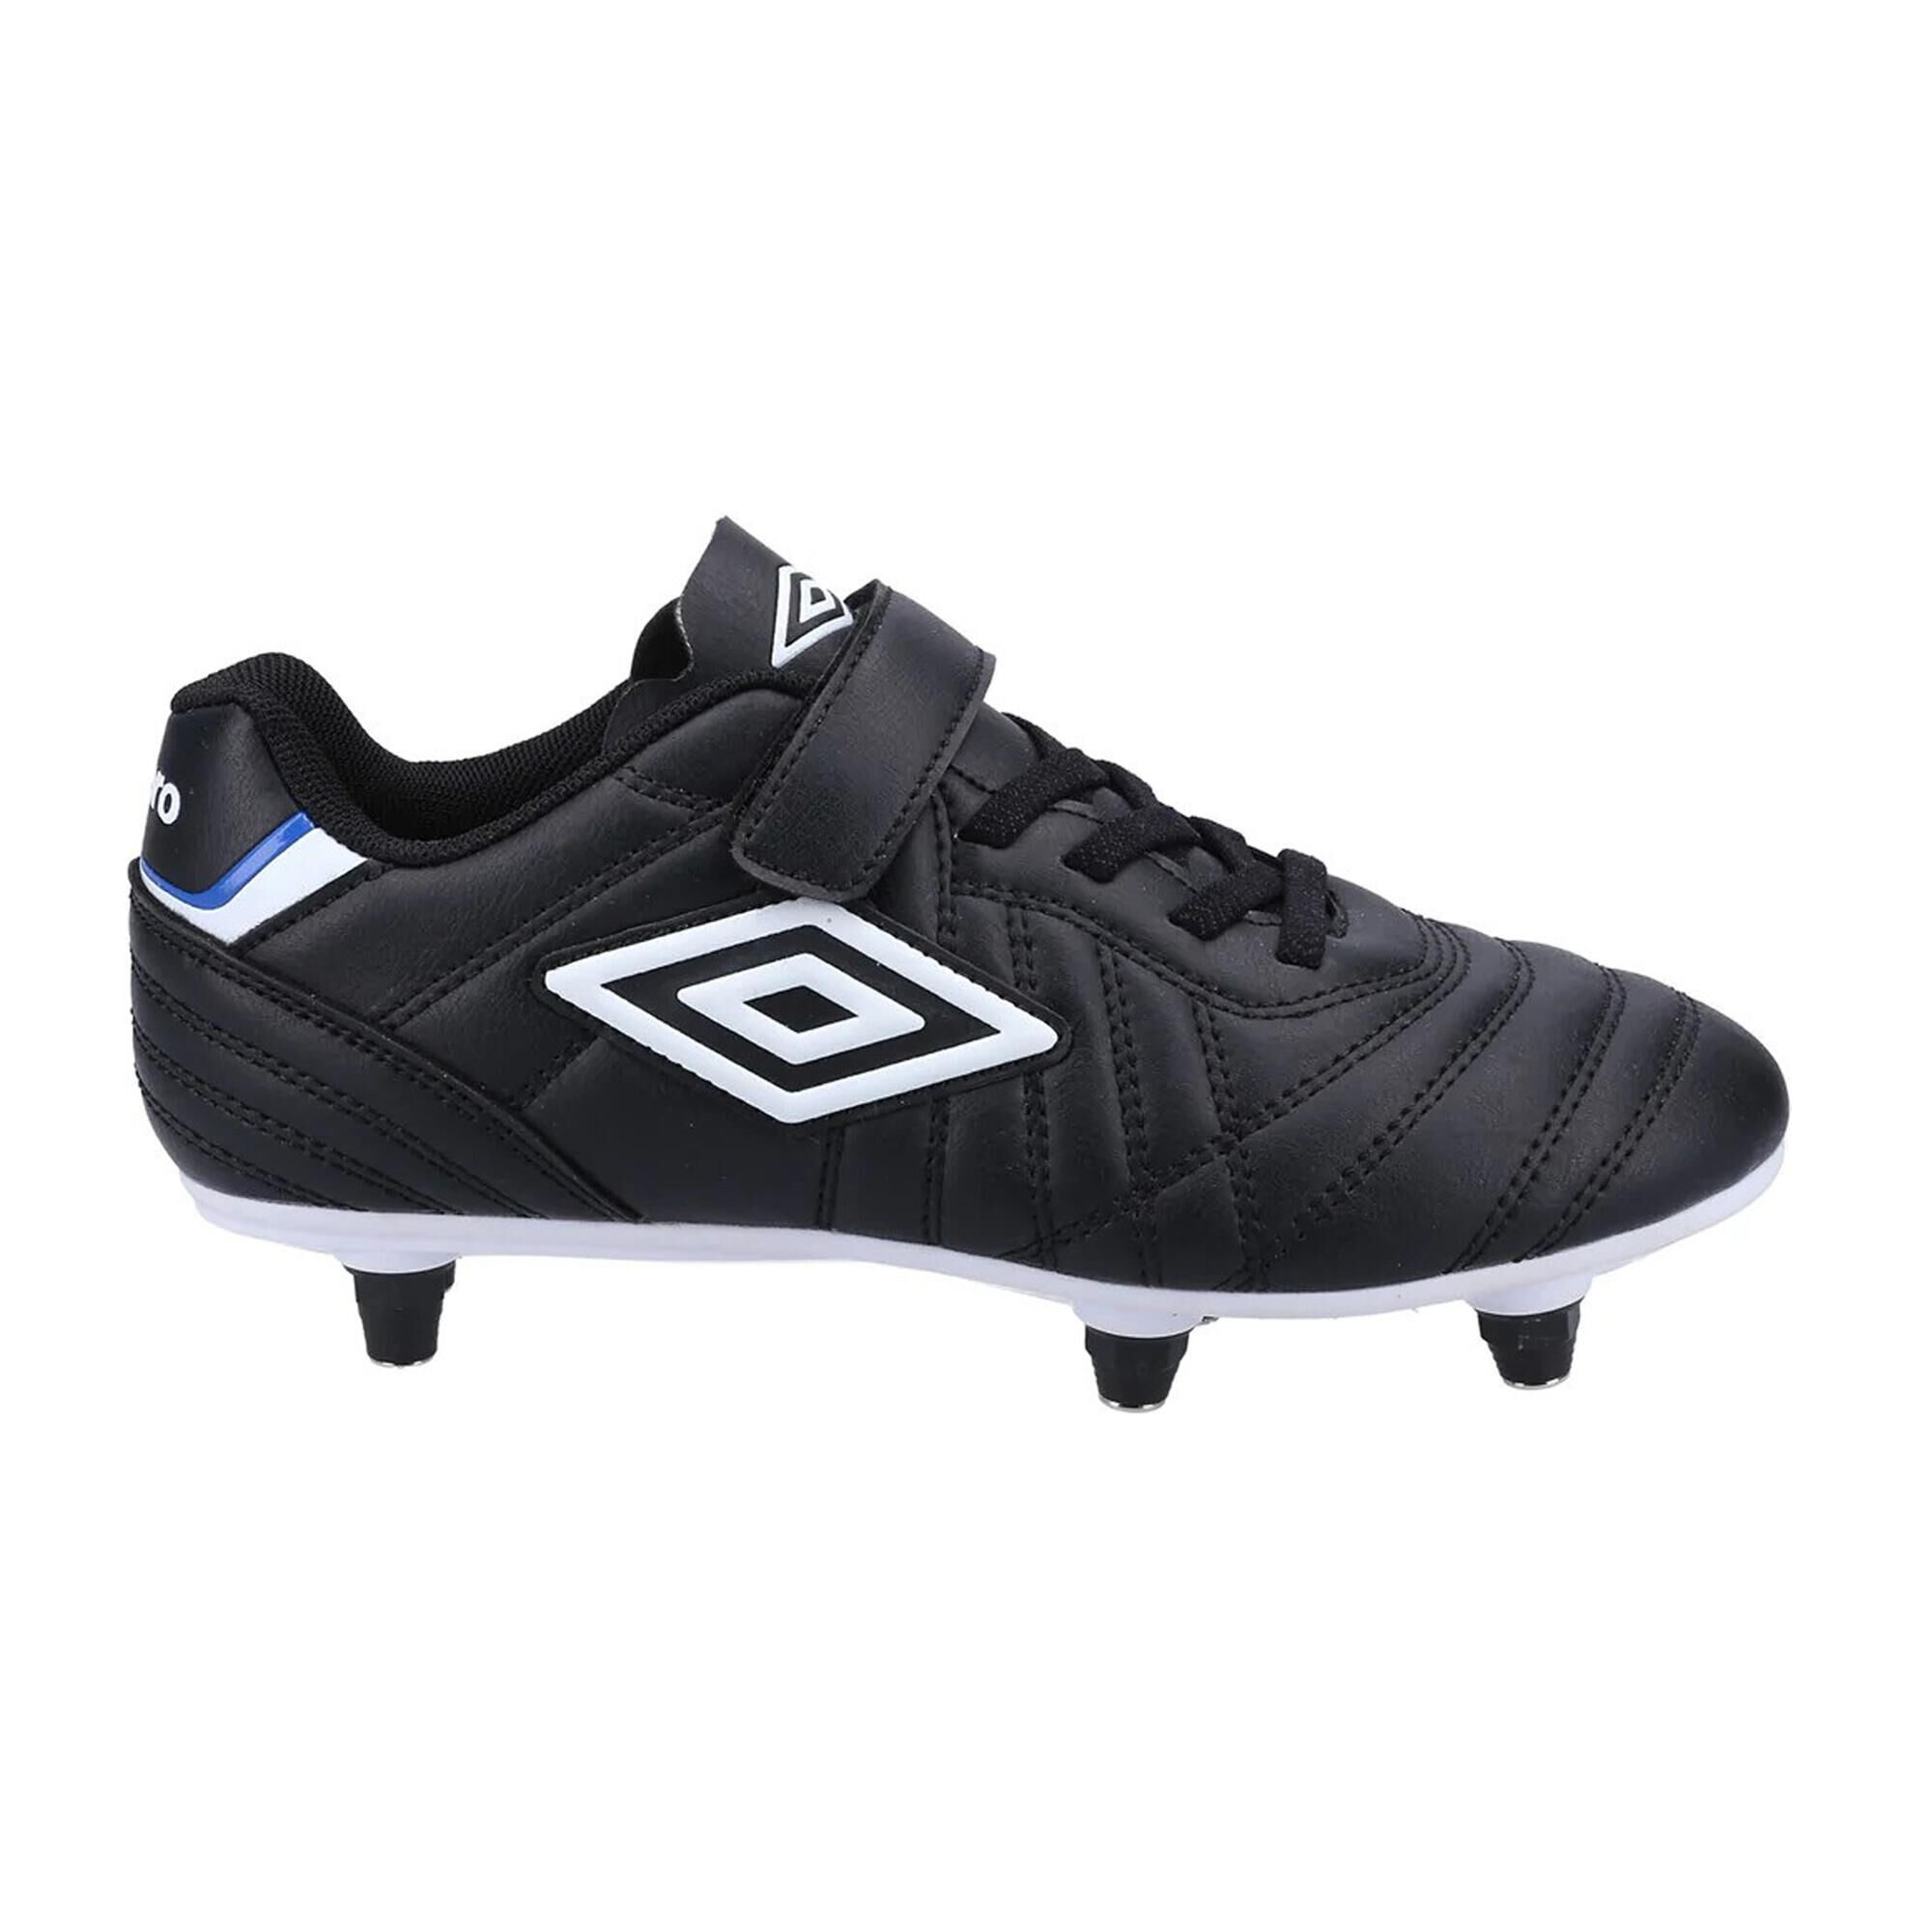 UMBRO Childrens/Kids Speciali Liga Leather Football Boots (Black/White)